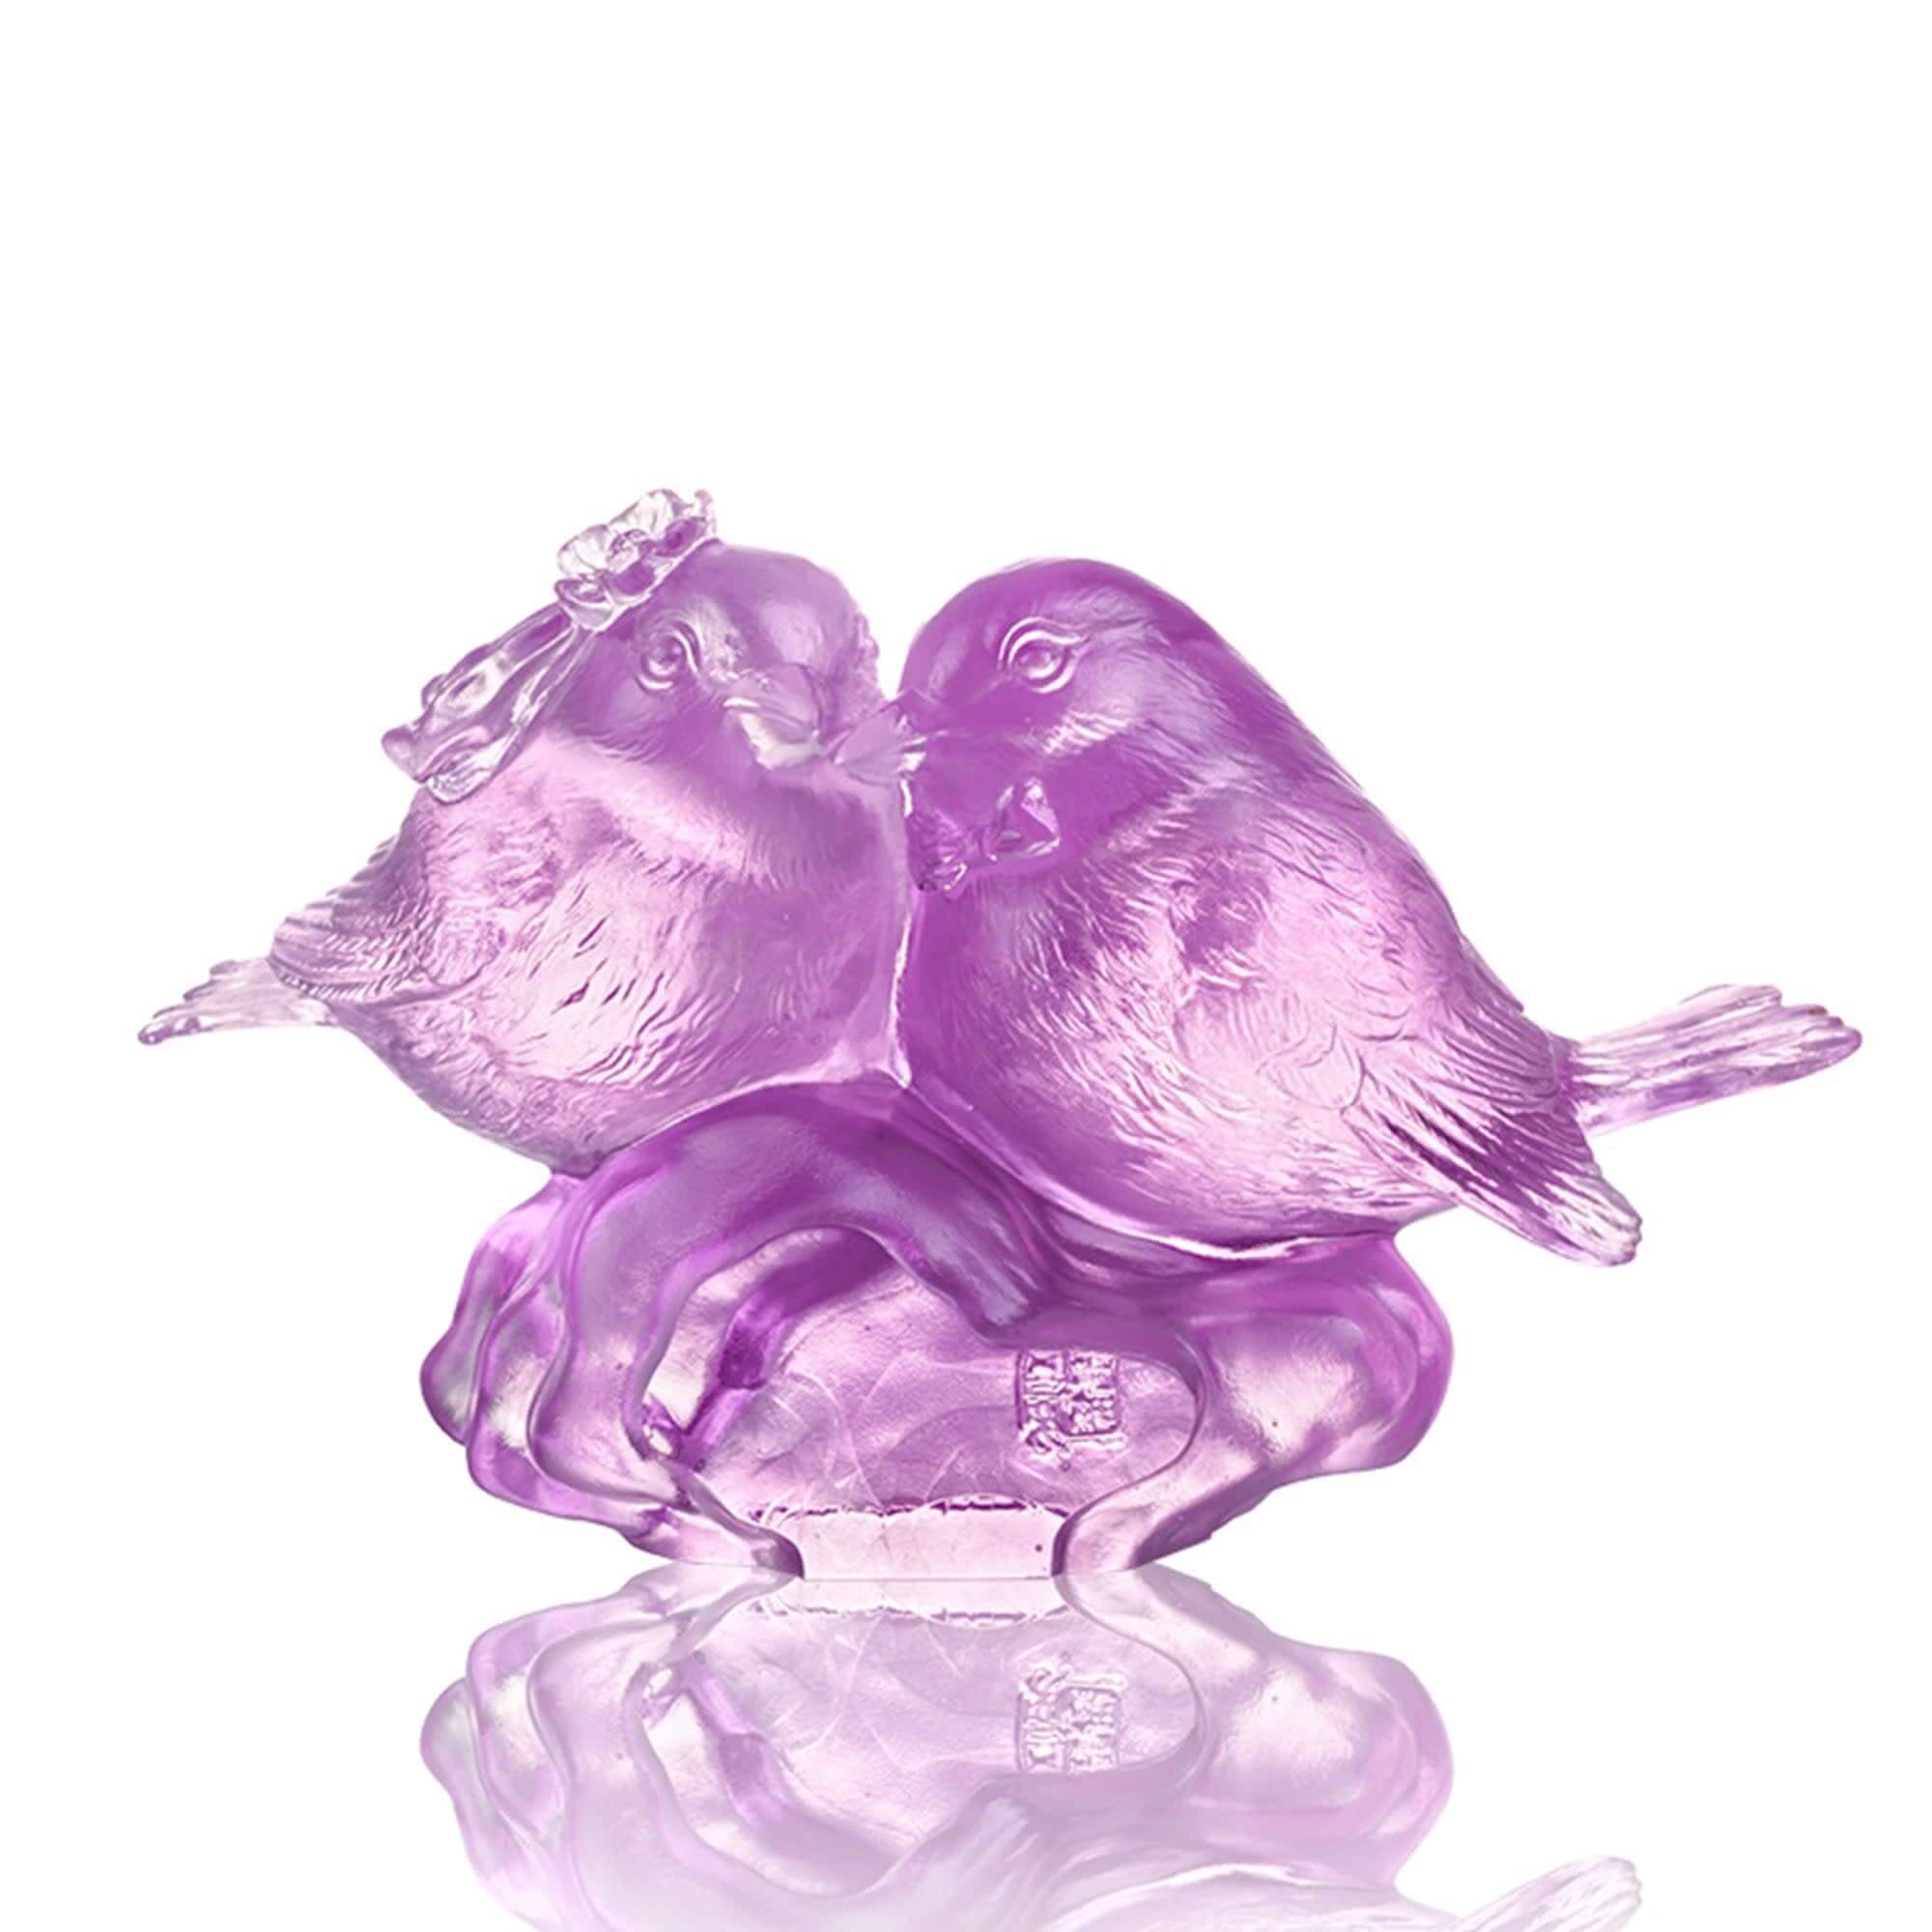 LIULI Crystal Art Crystal Bird Sculpture, Our Happiness